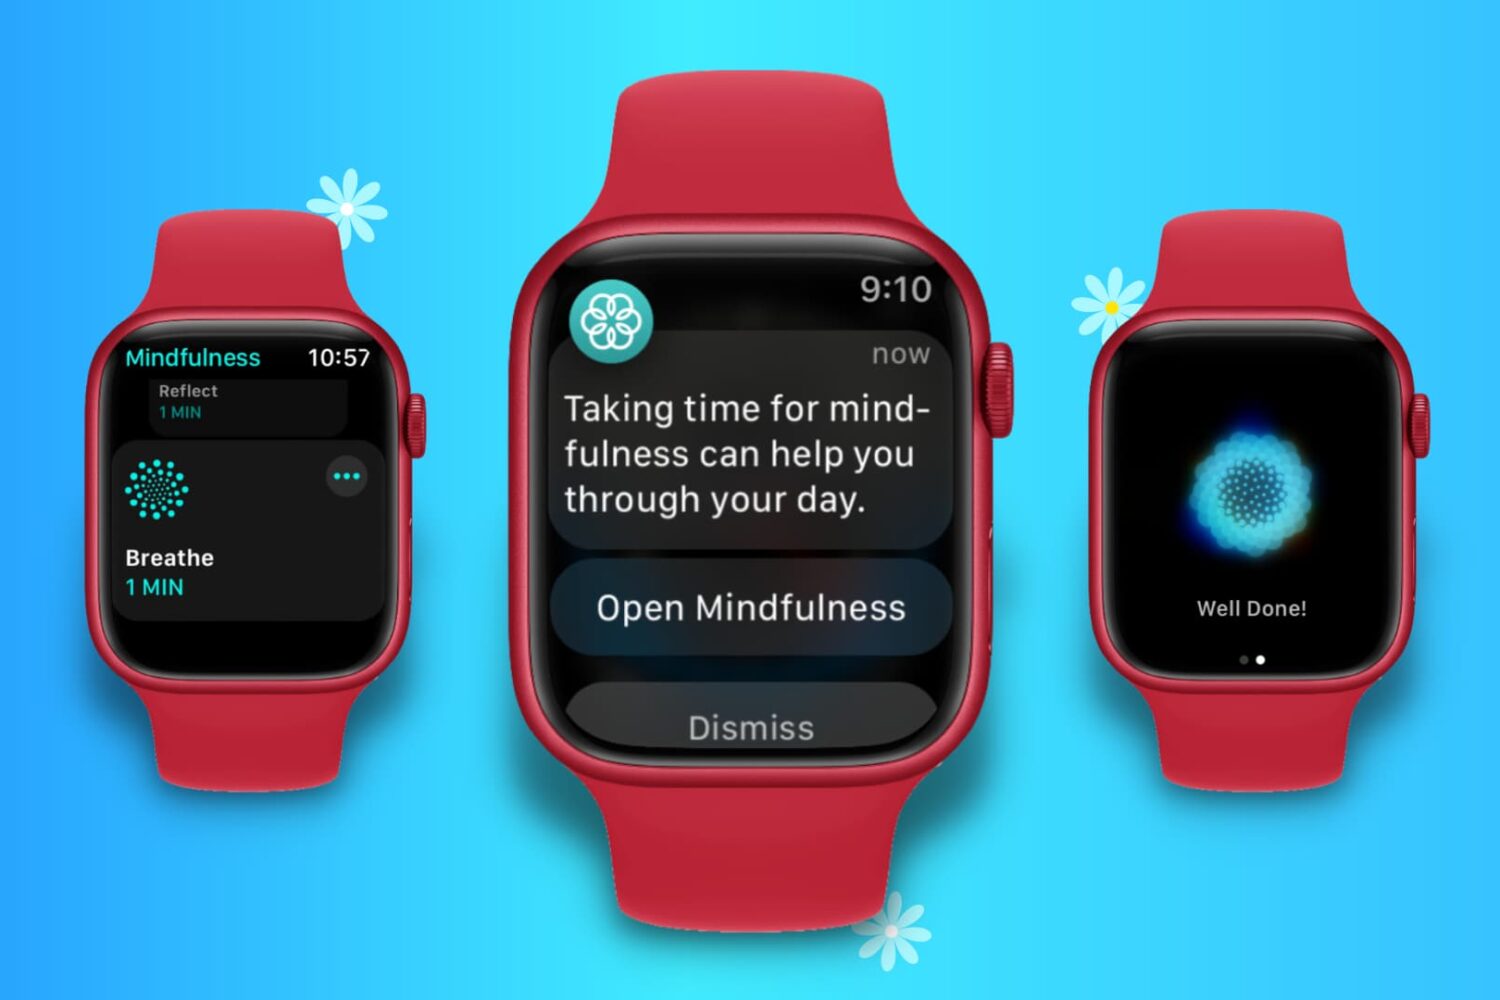 Open Mindfulness notification on Apple Watch